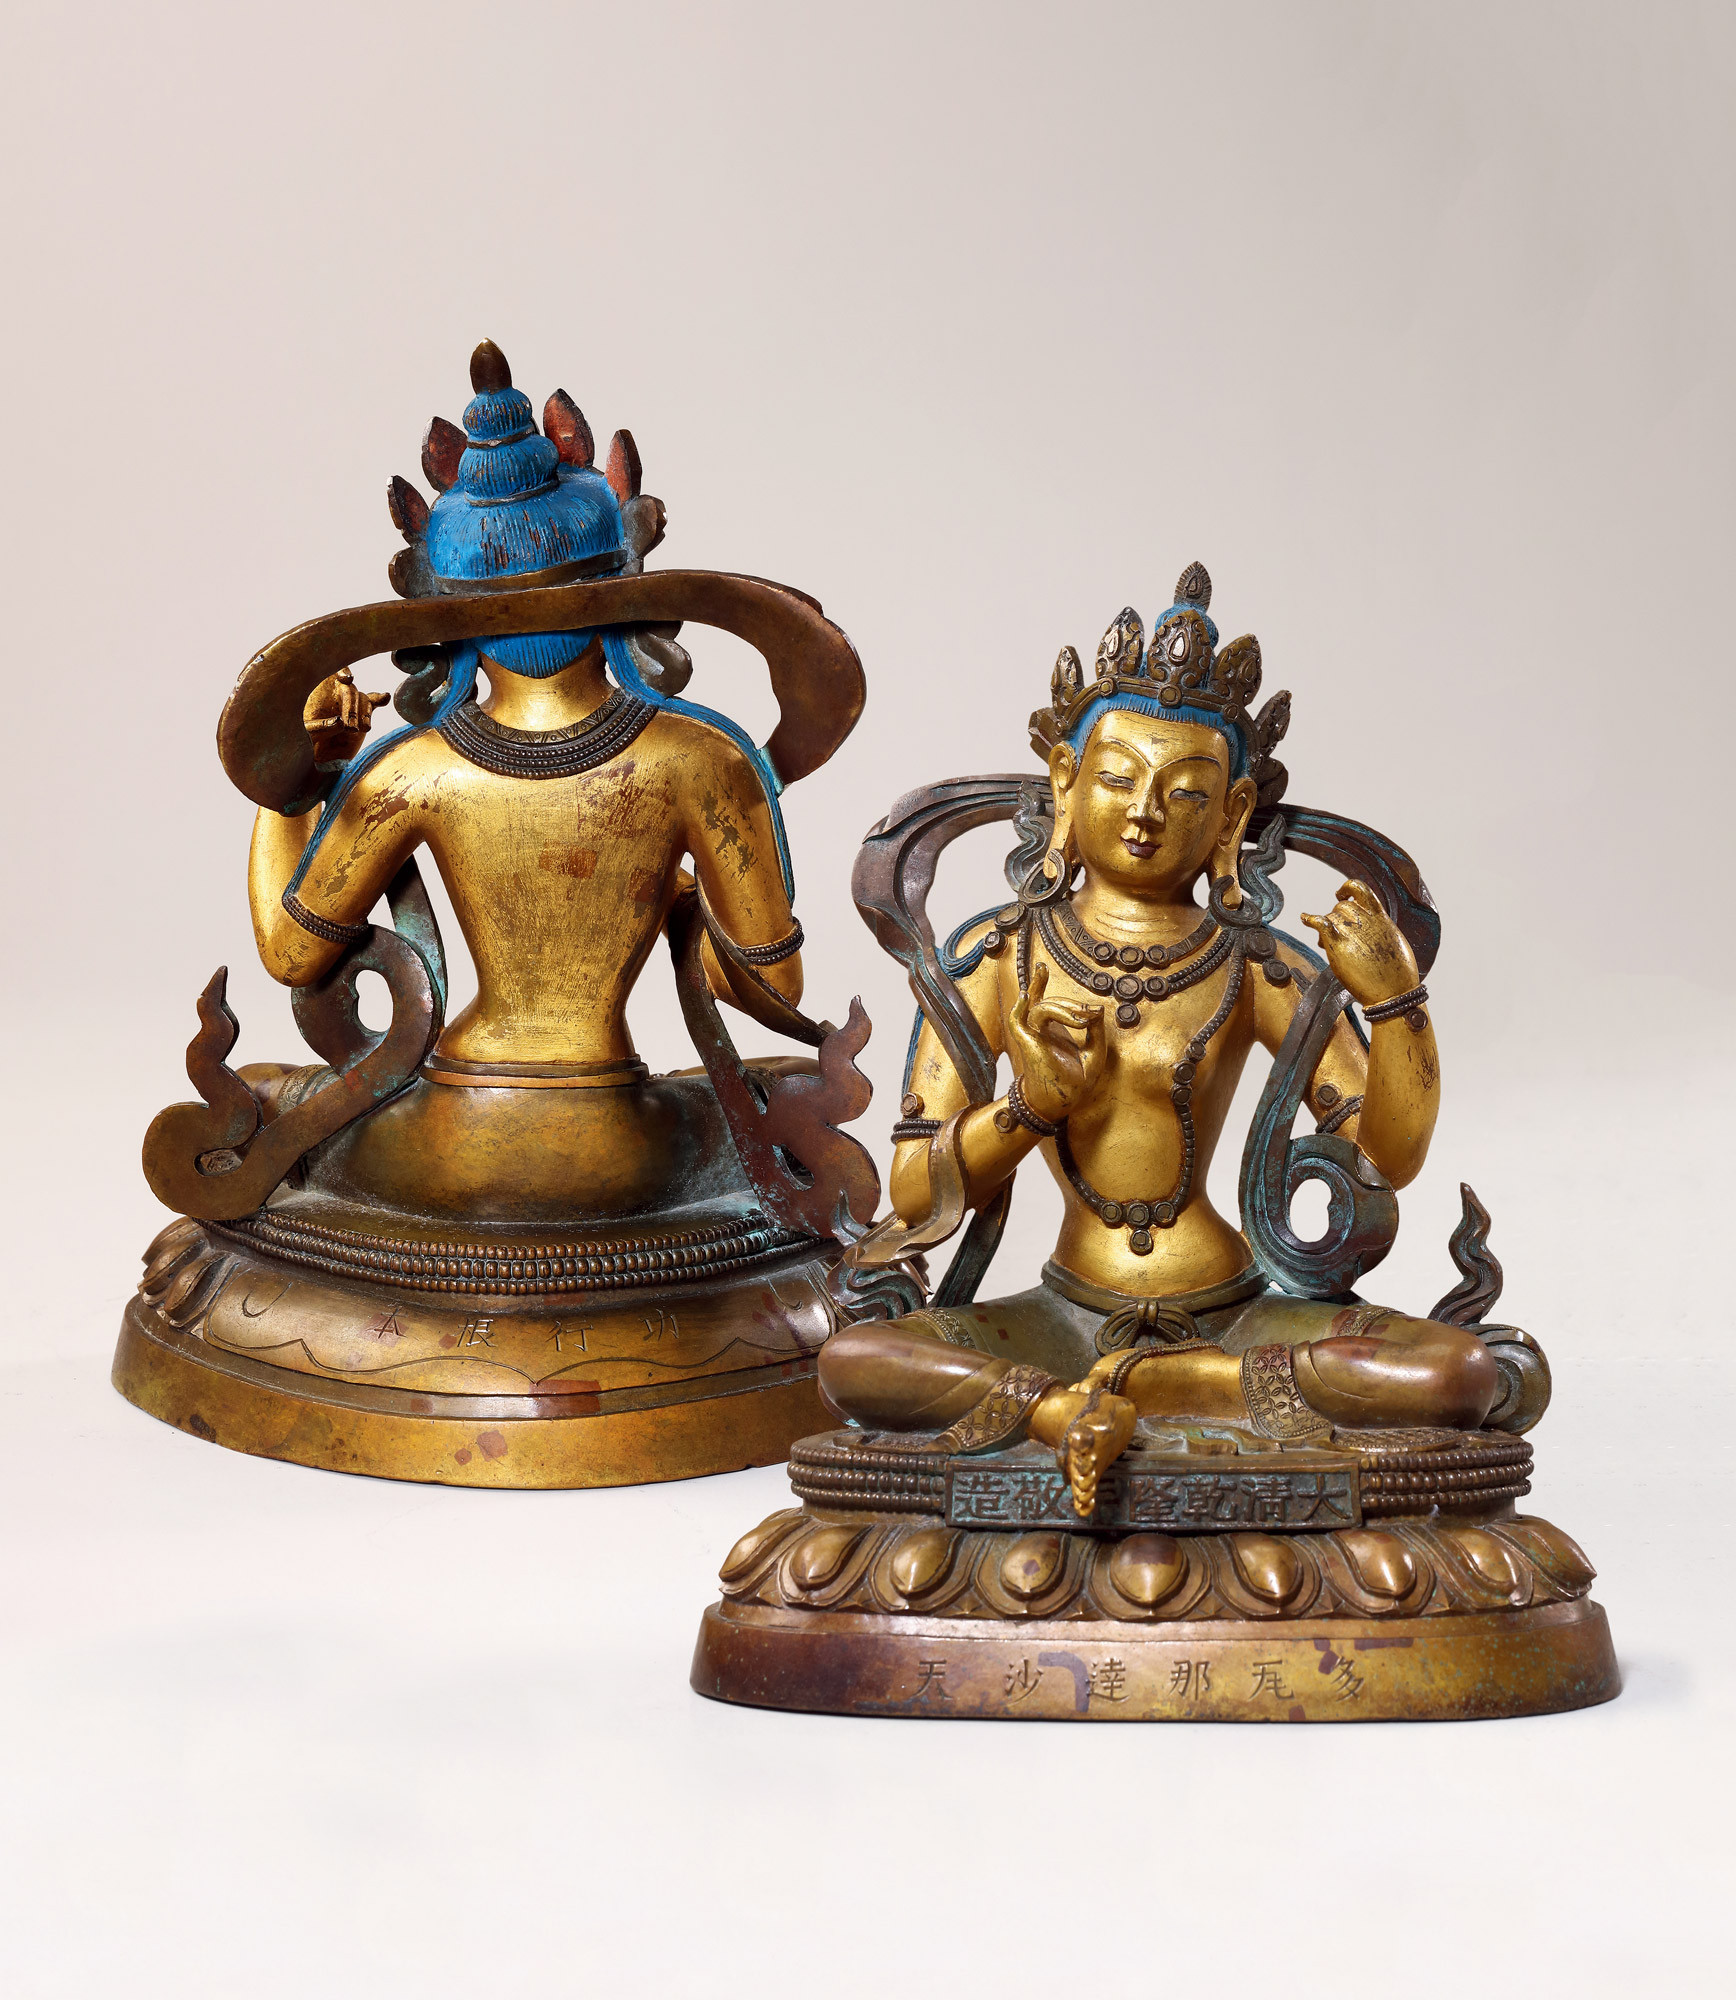 A bronze figure of Bodhisattva